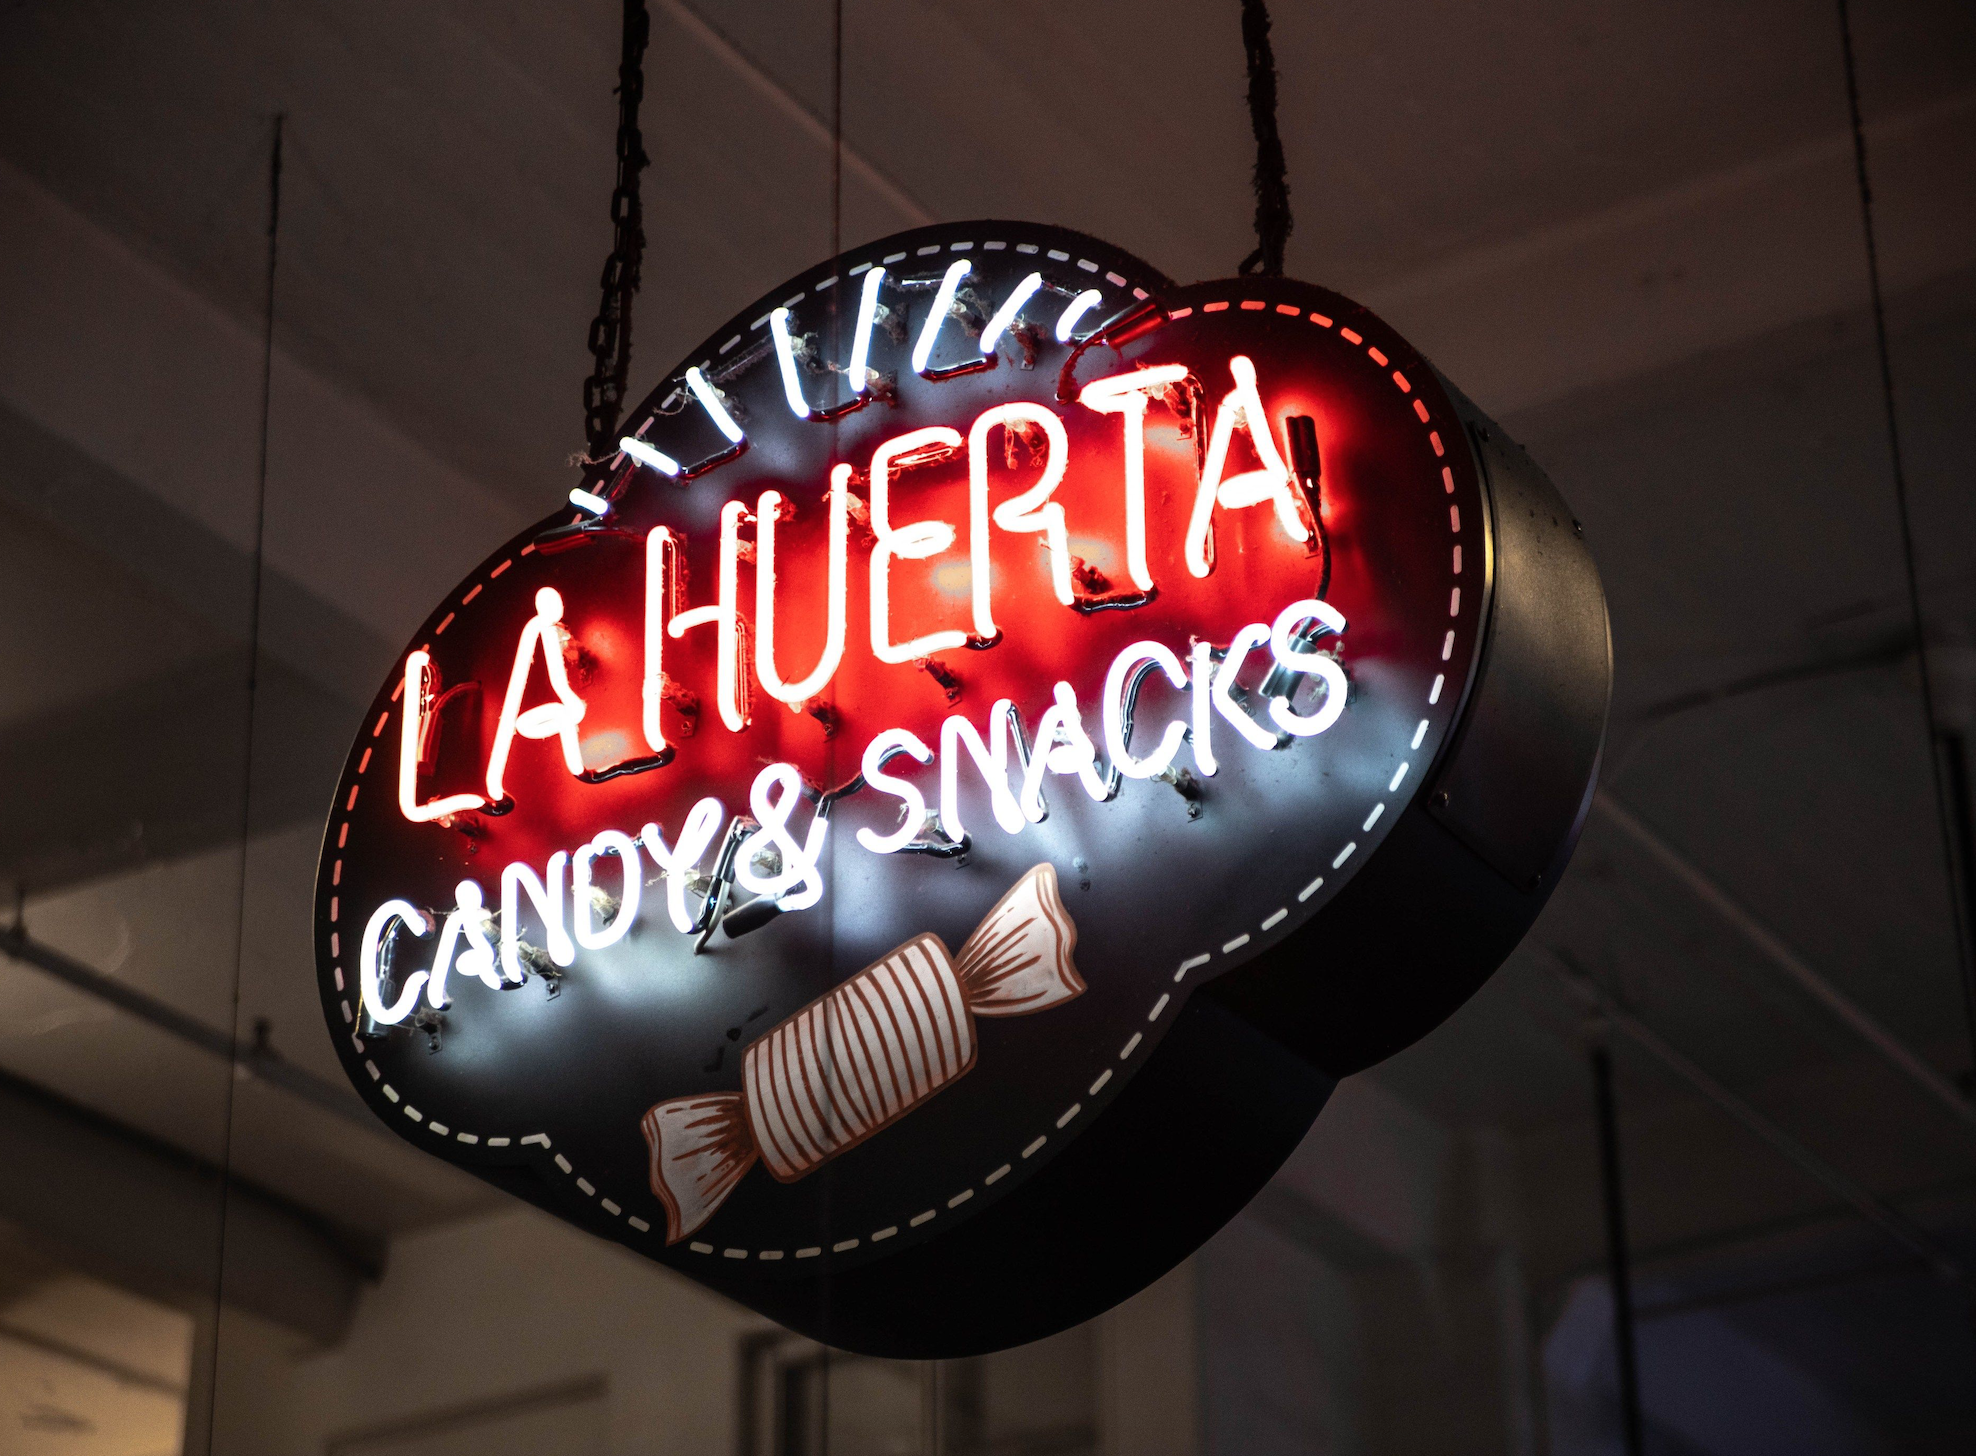 La Huerta Candy